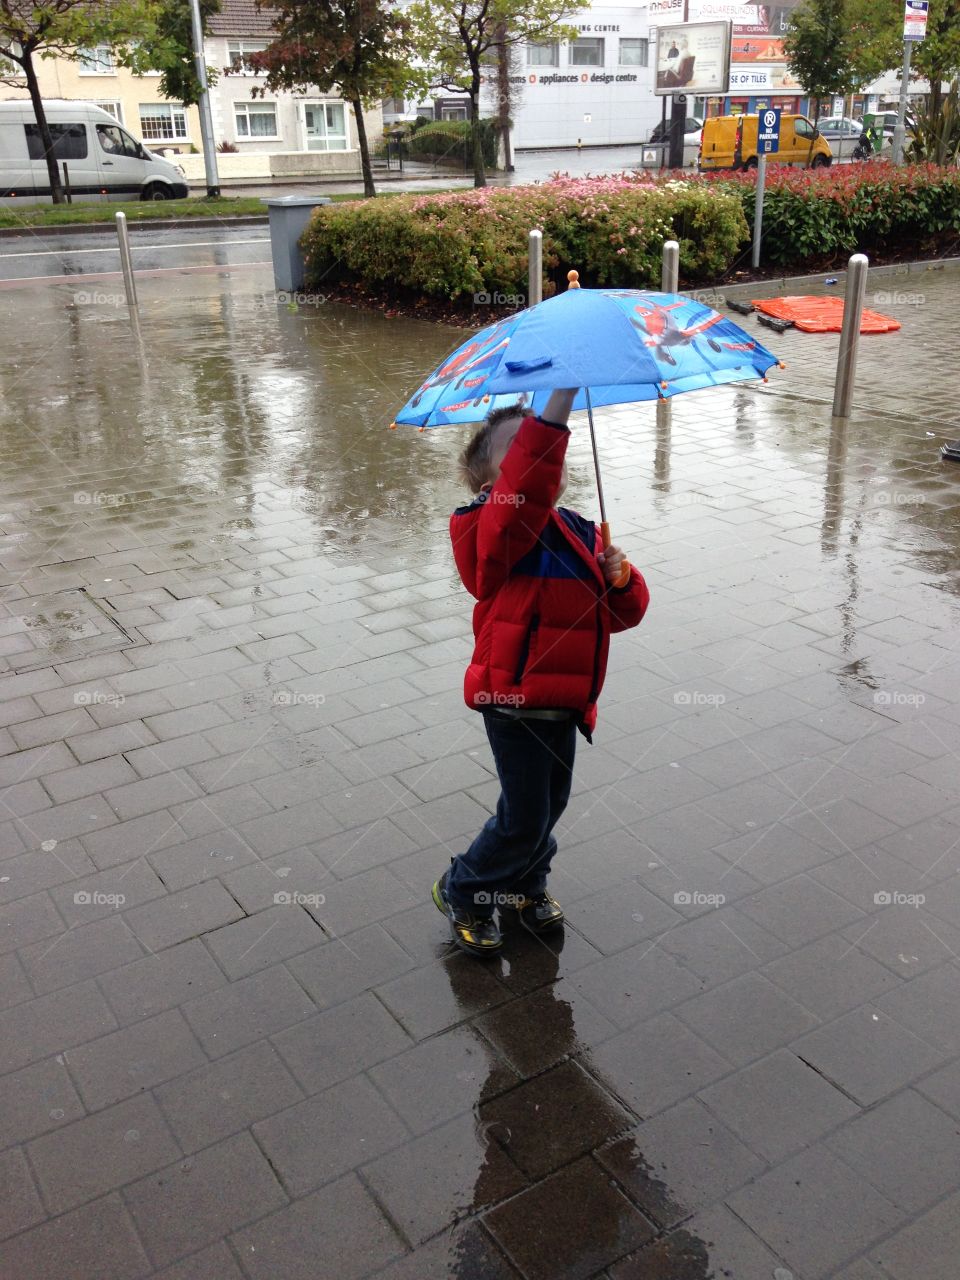 Play in the rain. Rainy day in Ireland